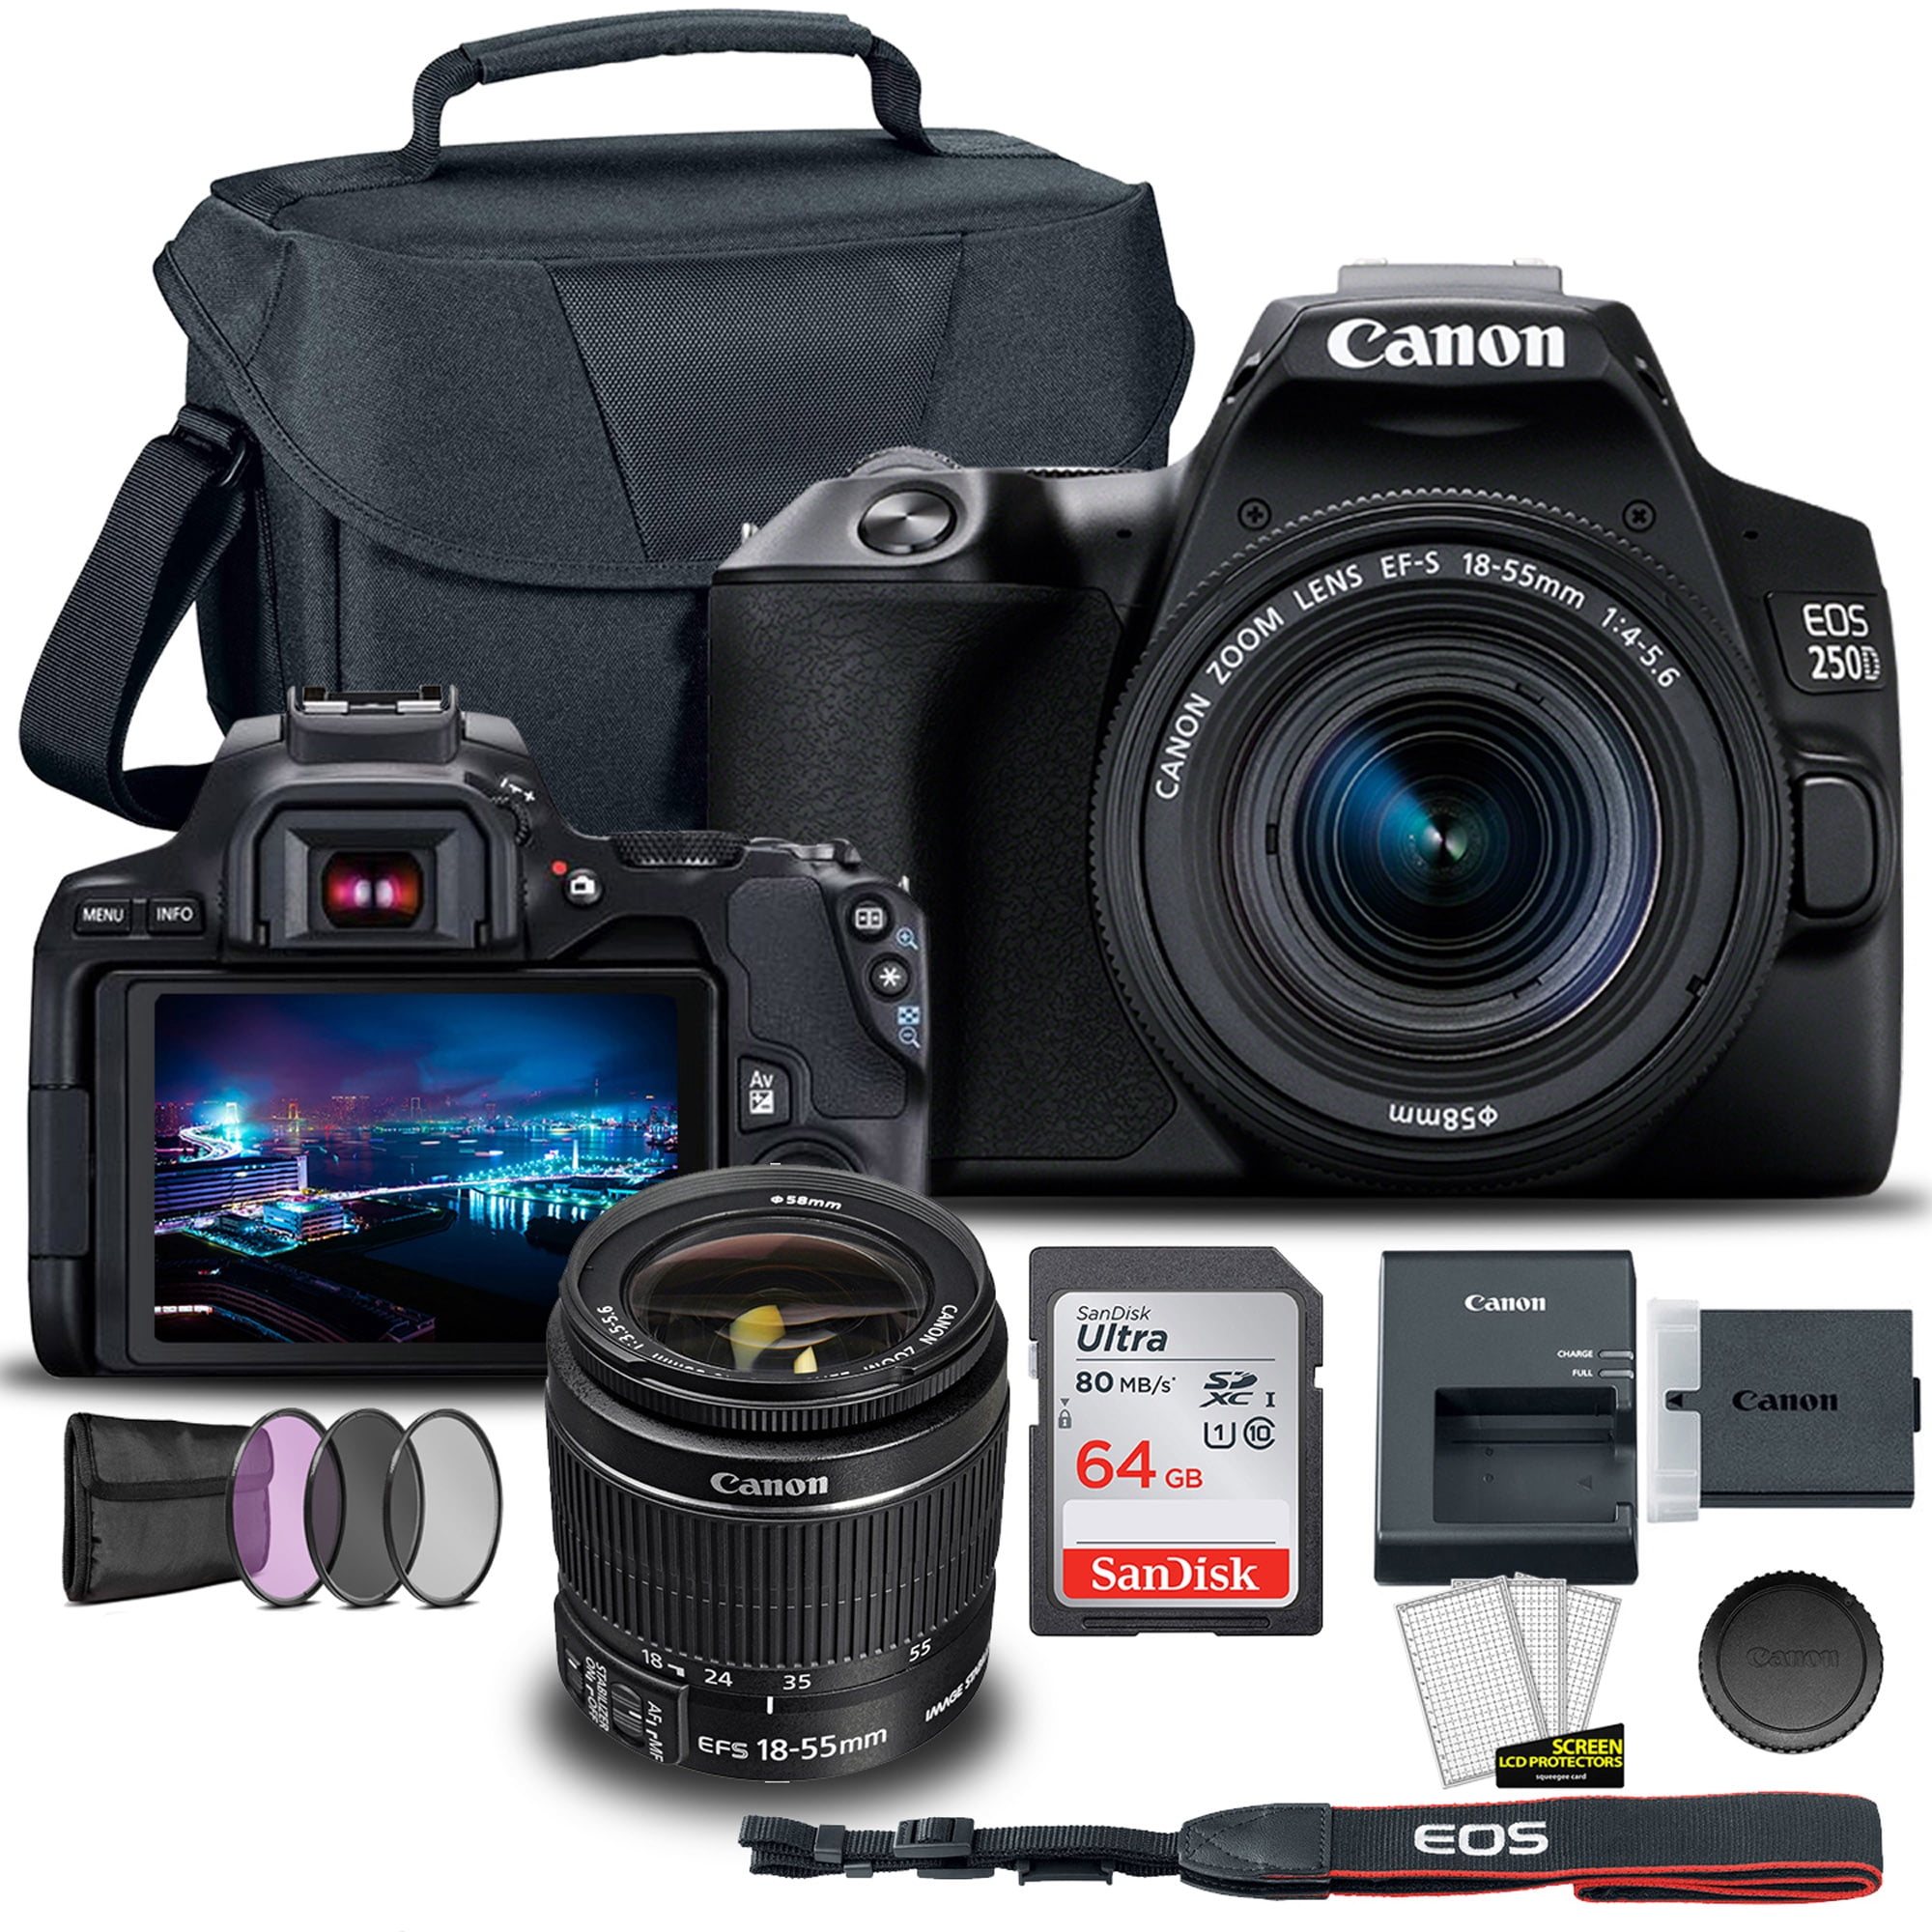 ▷ CANON 250D, la cámara ideal para acompañar a tu móvil